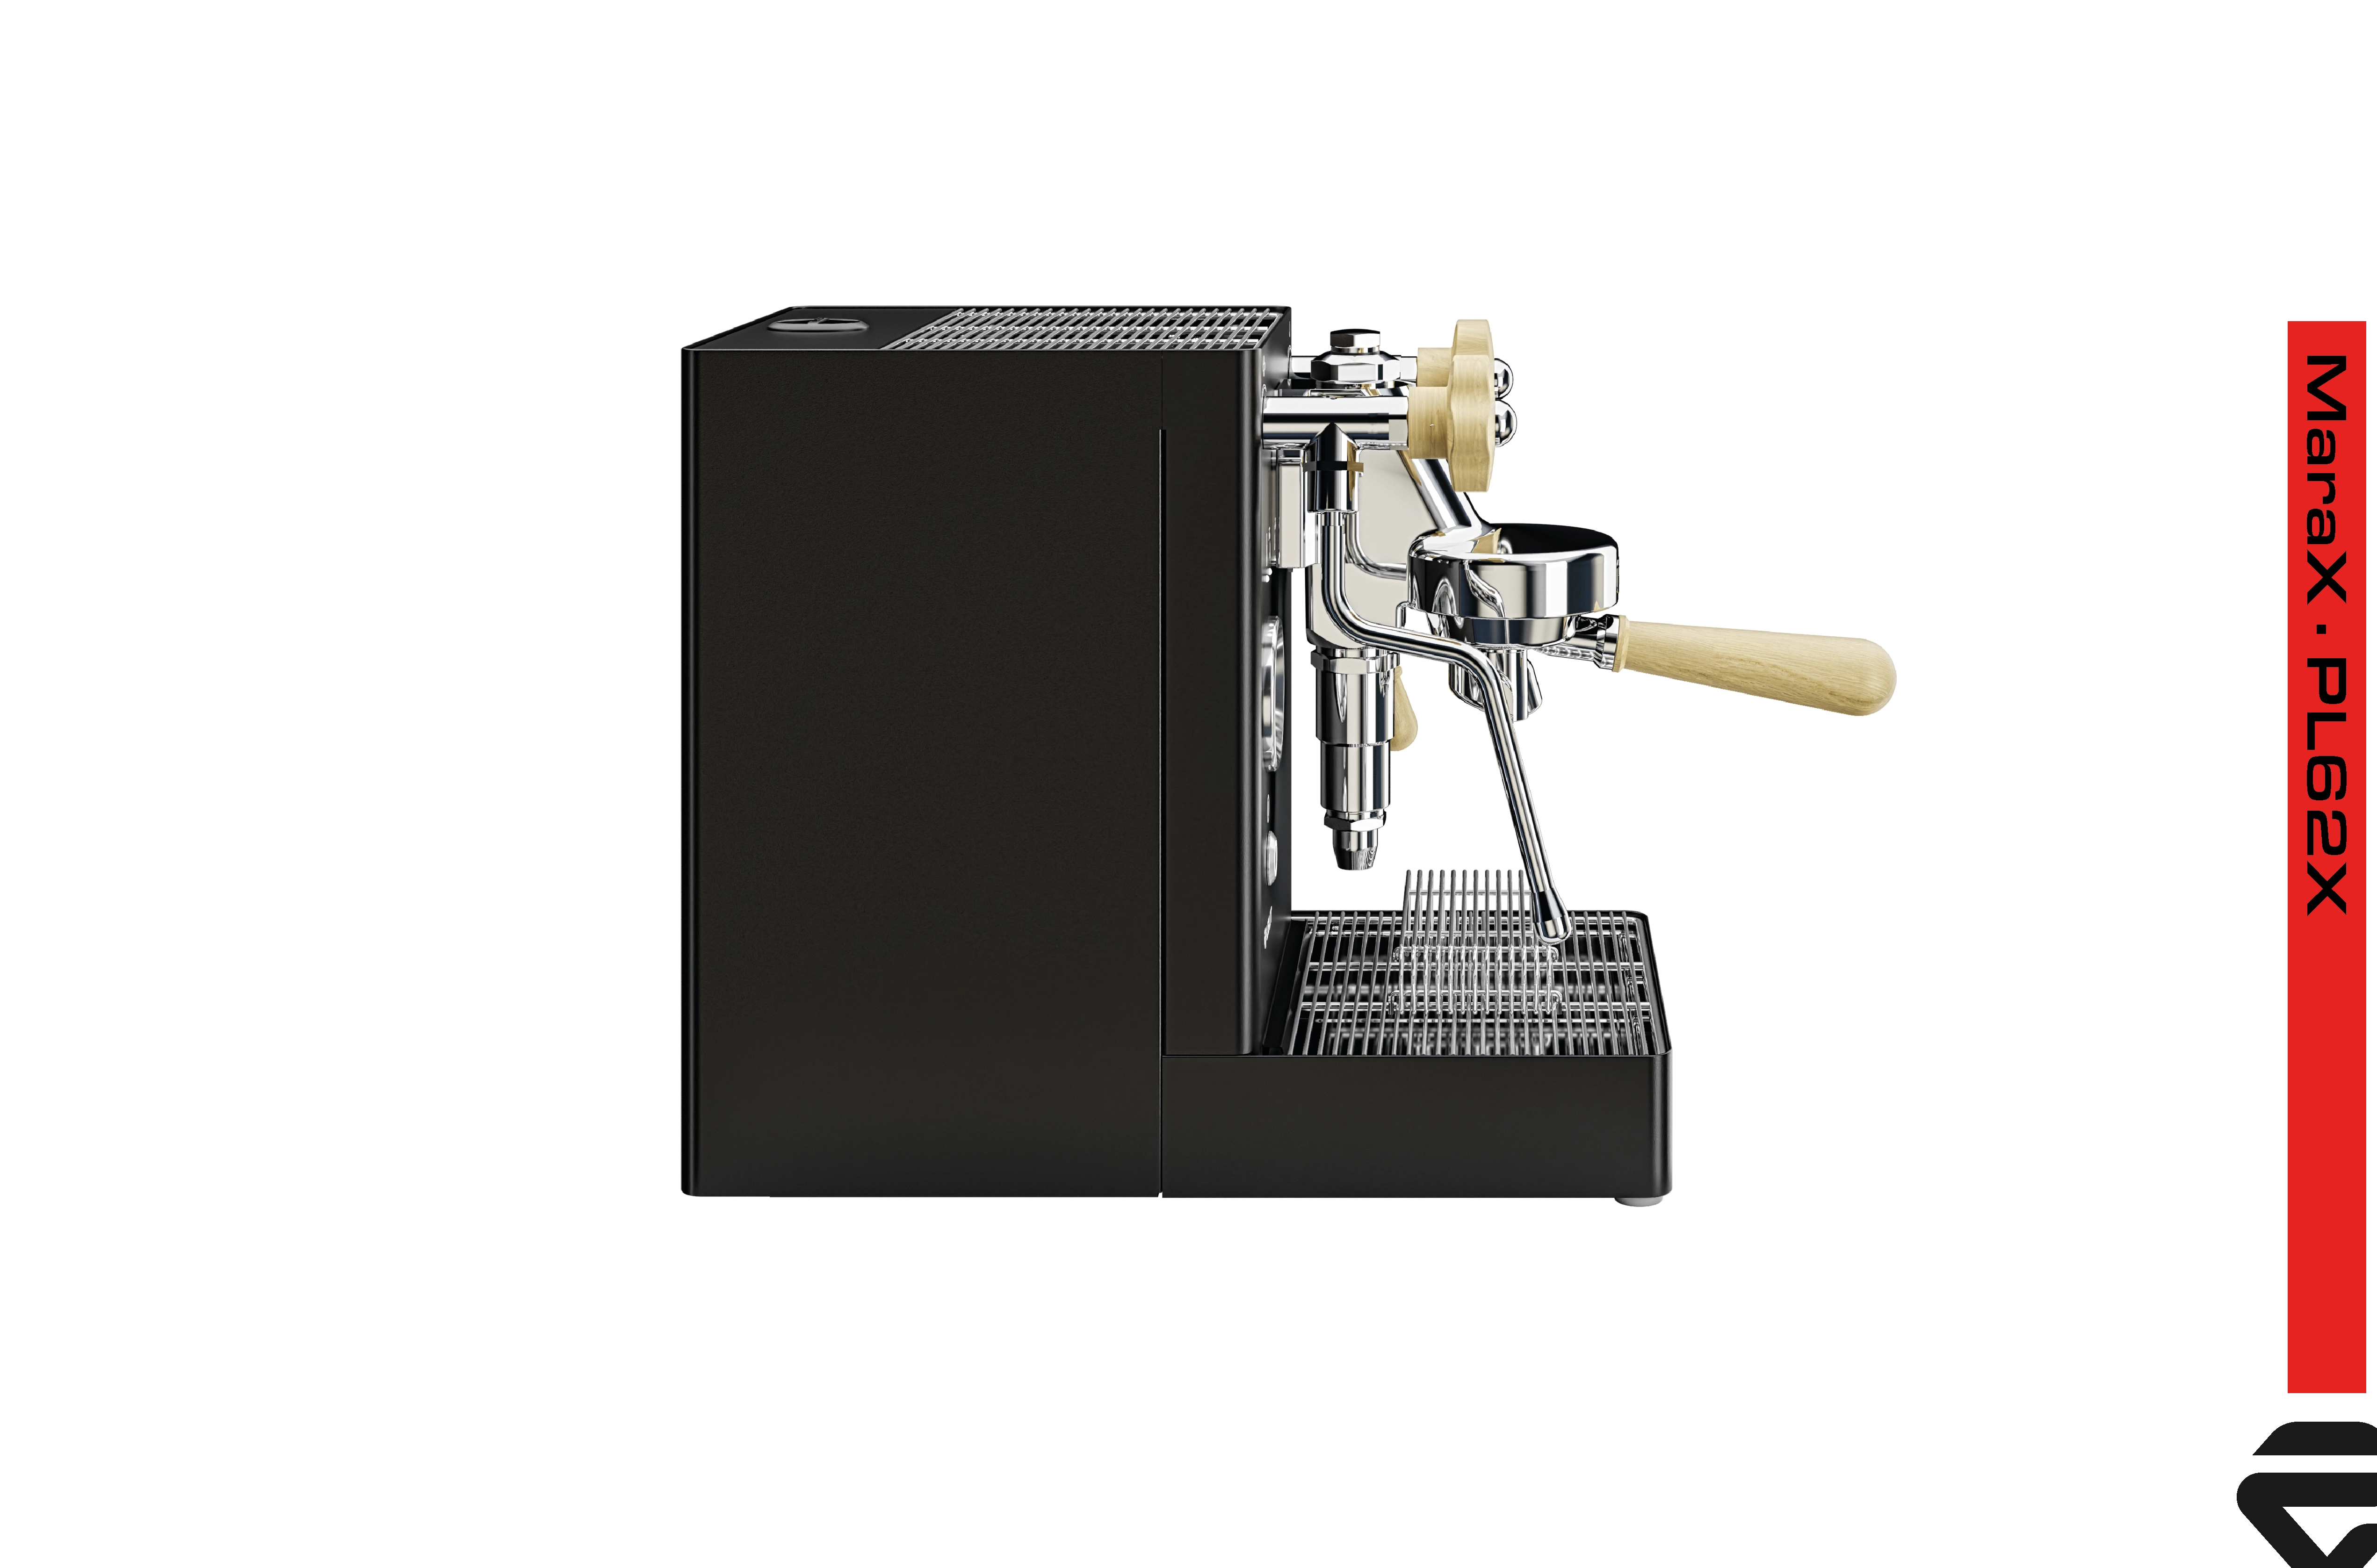 Lelit MaraX PL62X-EUCB Schwarz Espressomaschine